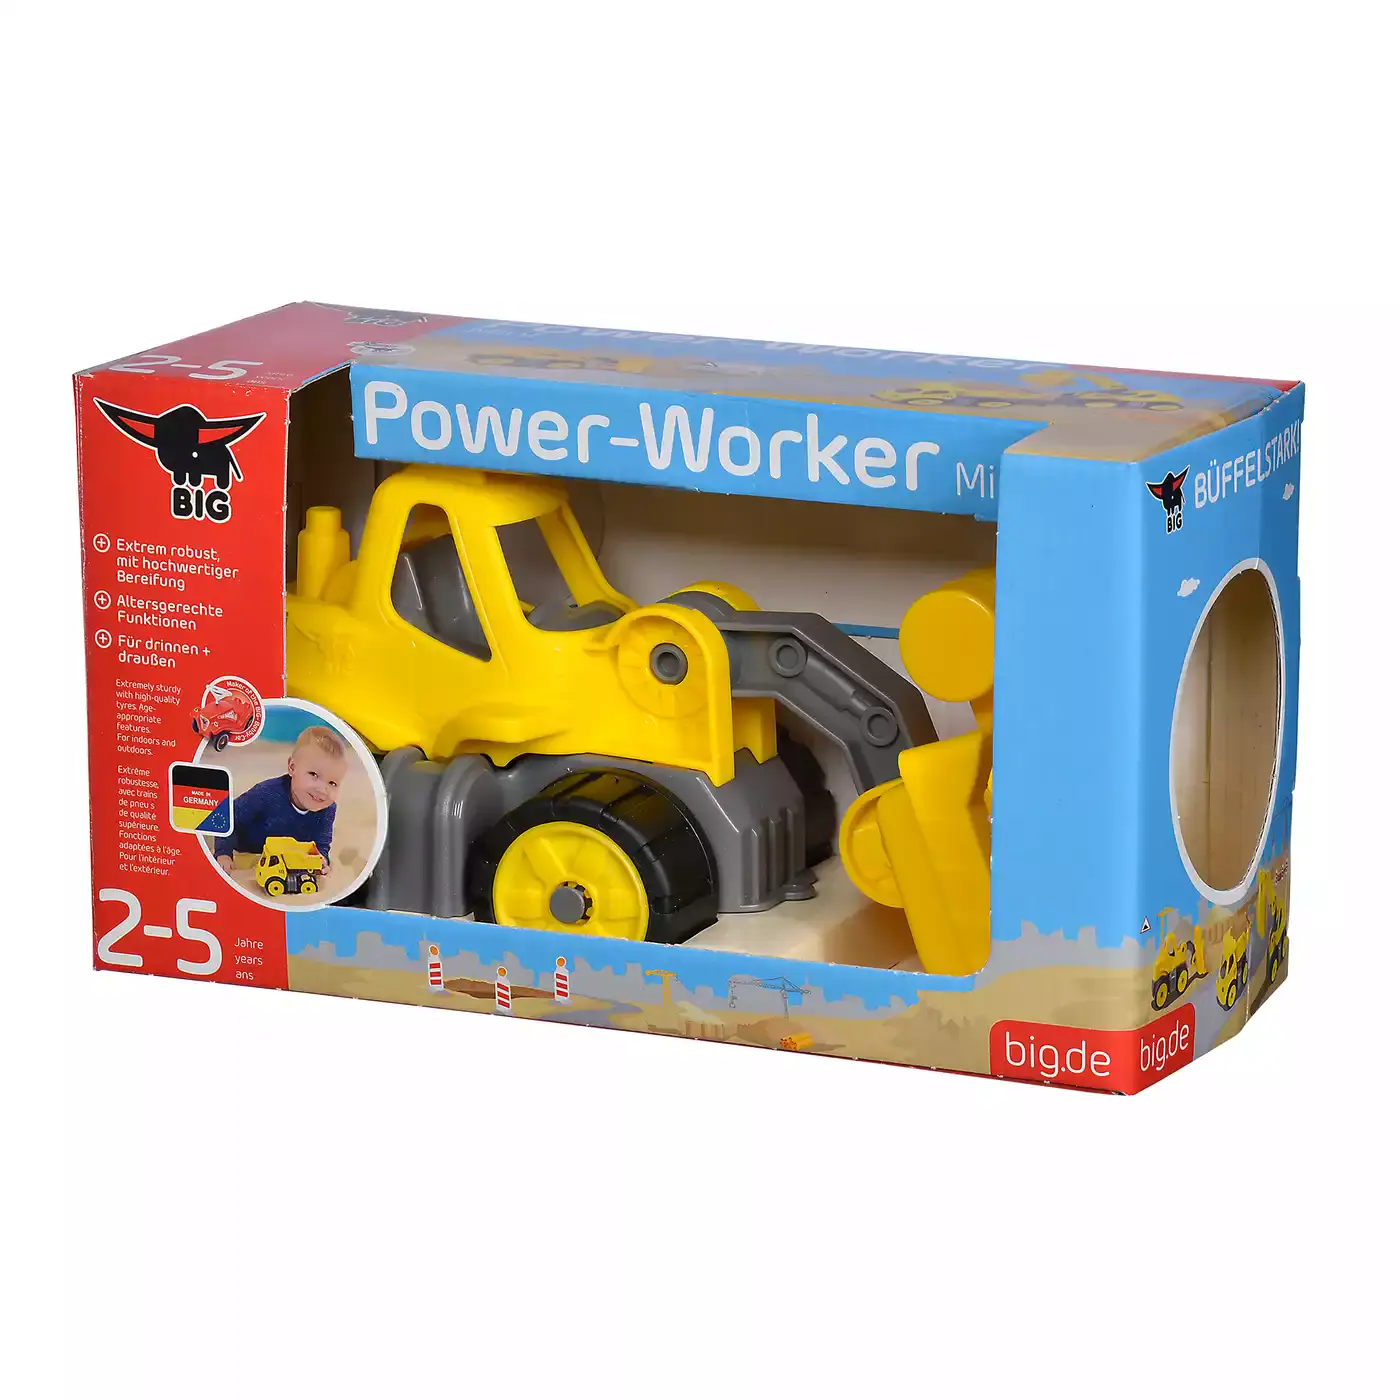 Power-Worker Mini Radlader BIG 2000566311204 7